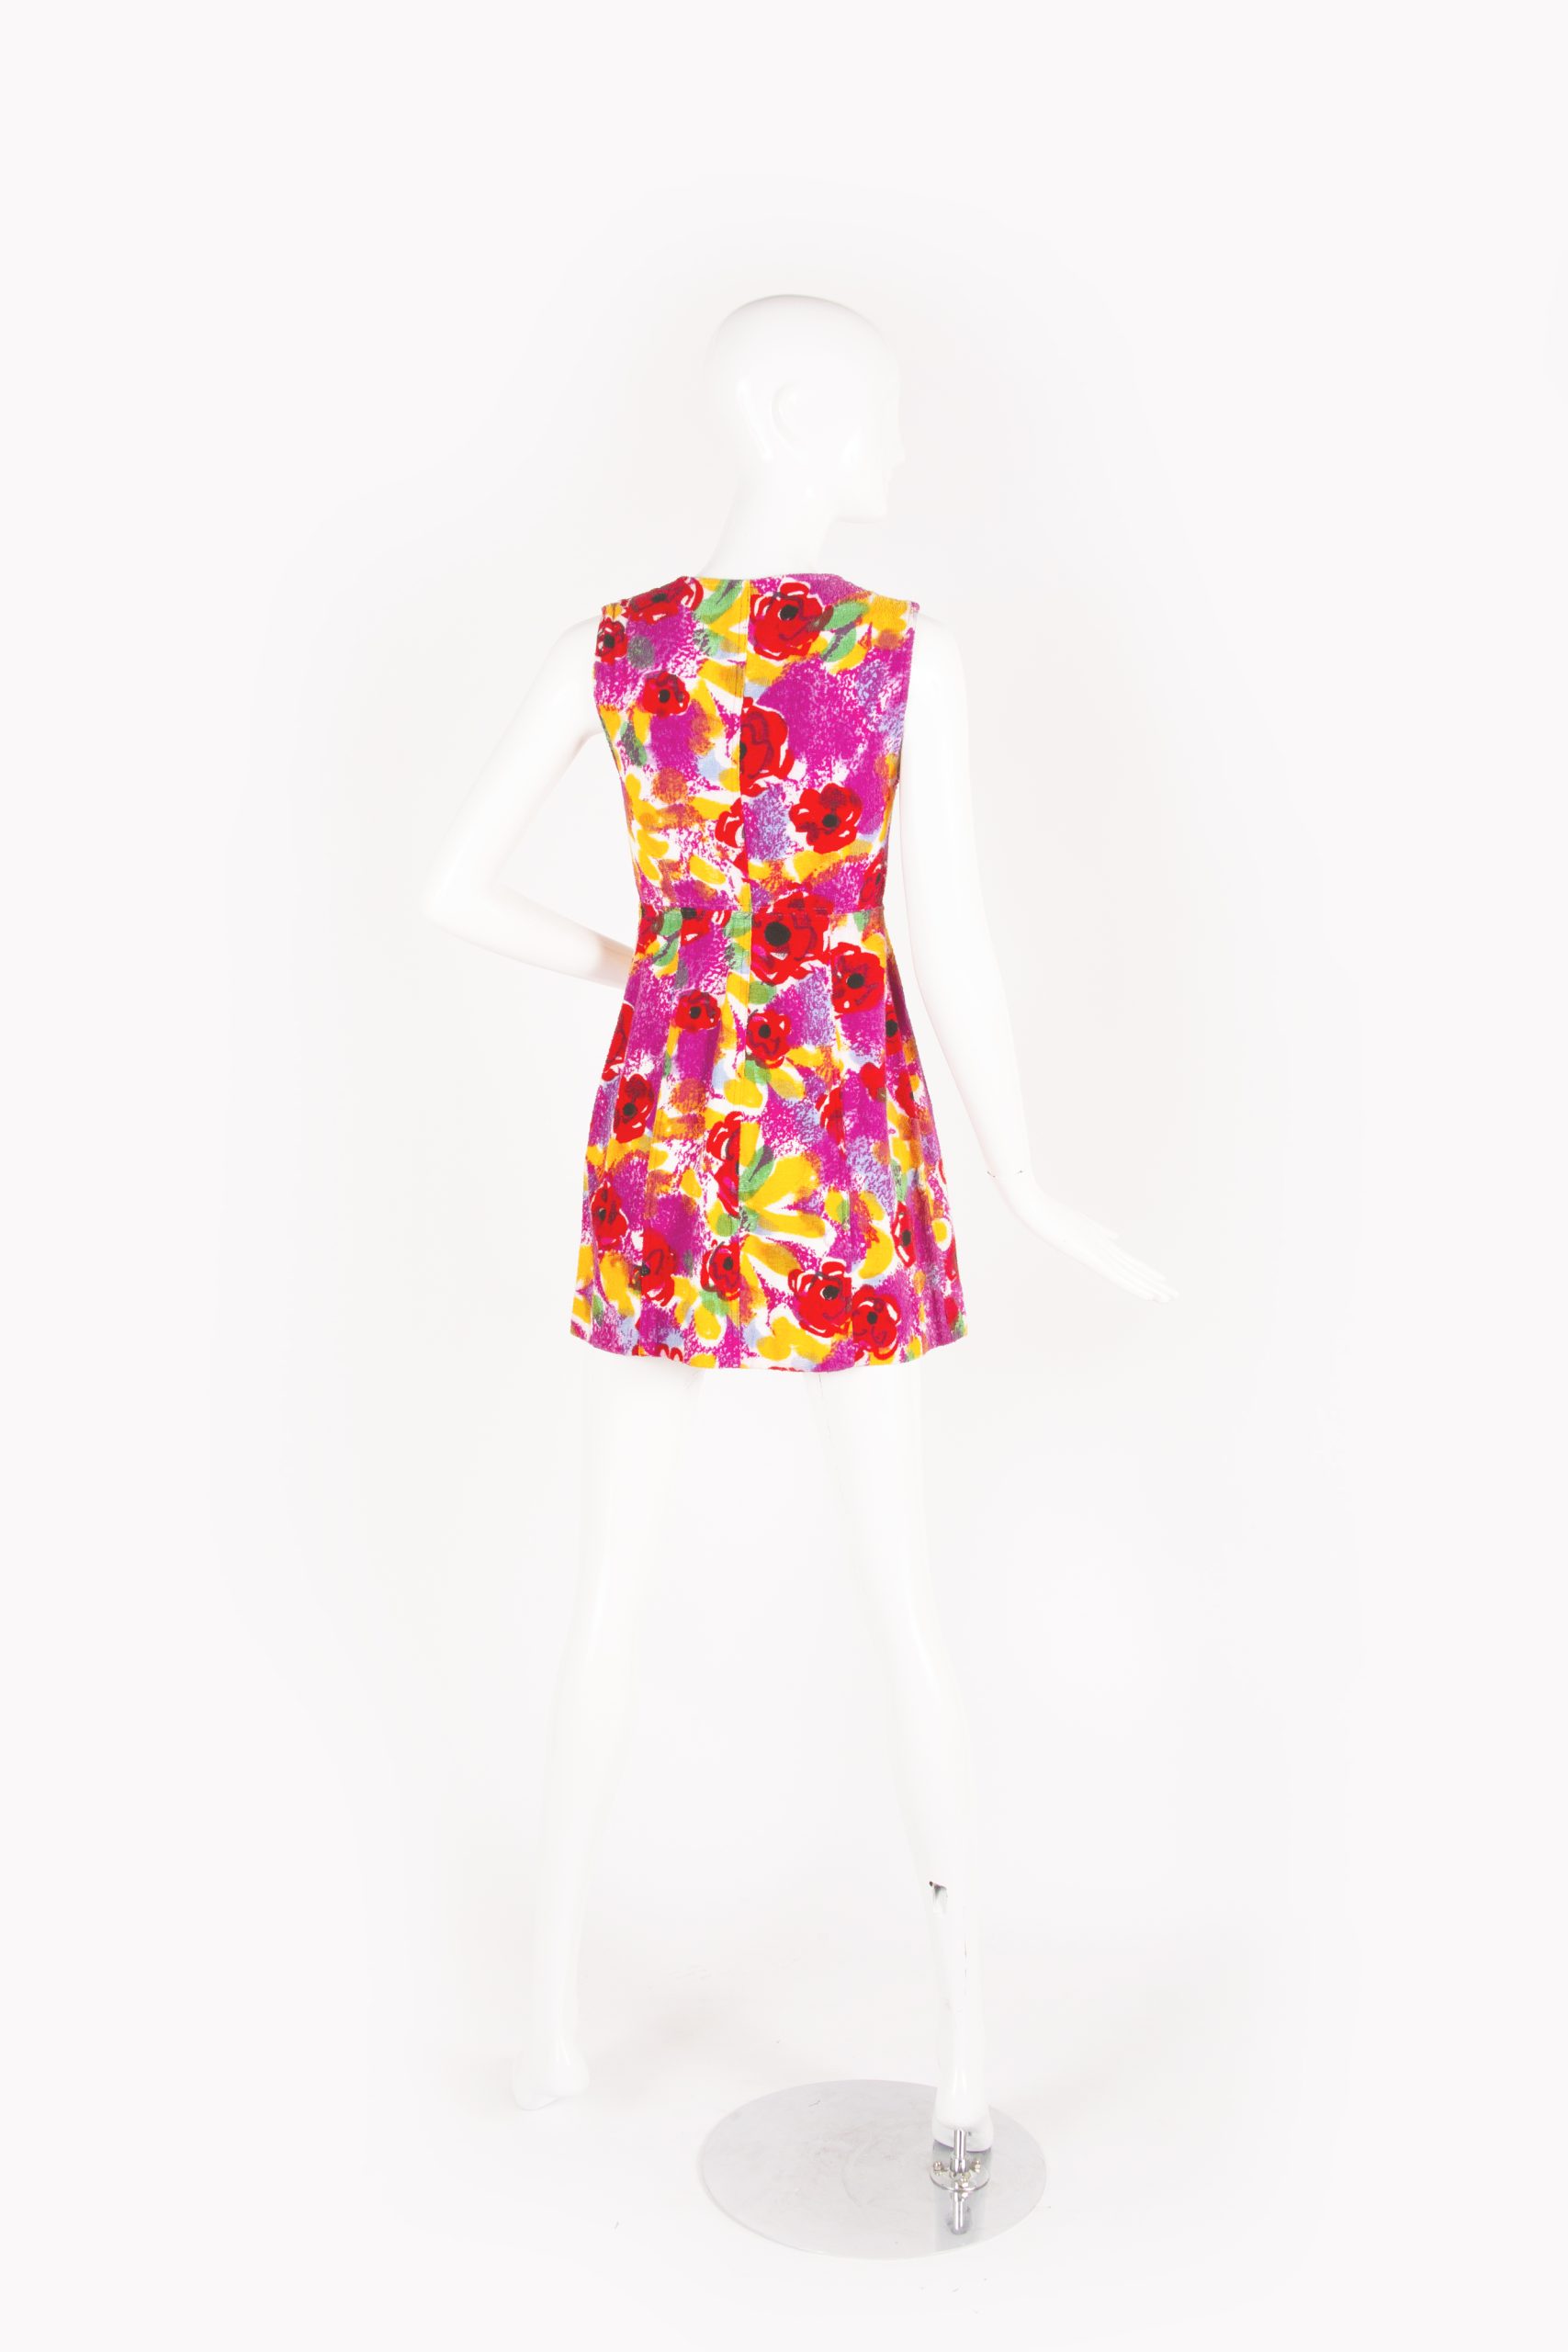 VINTAGE Chanel Terry Cloth Mini Dress